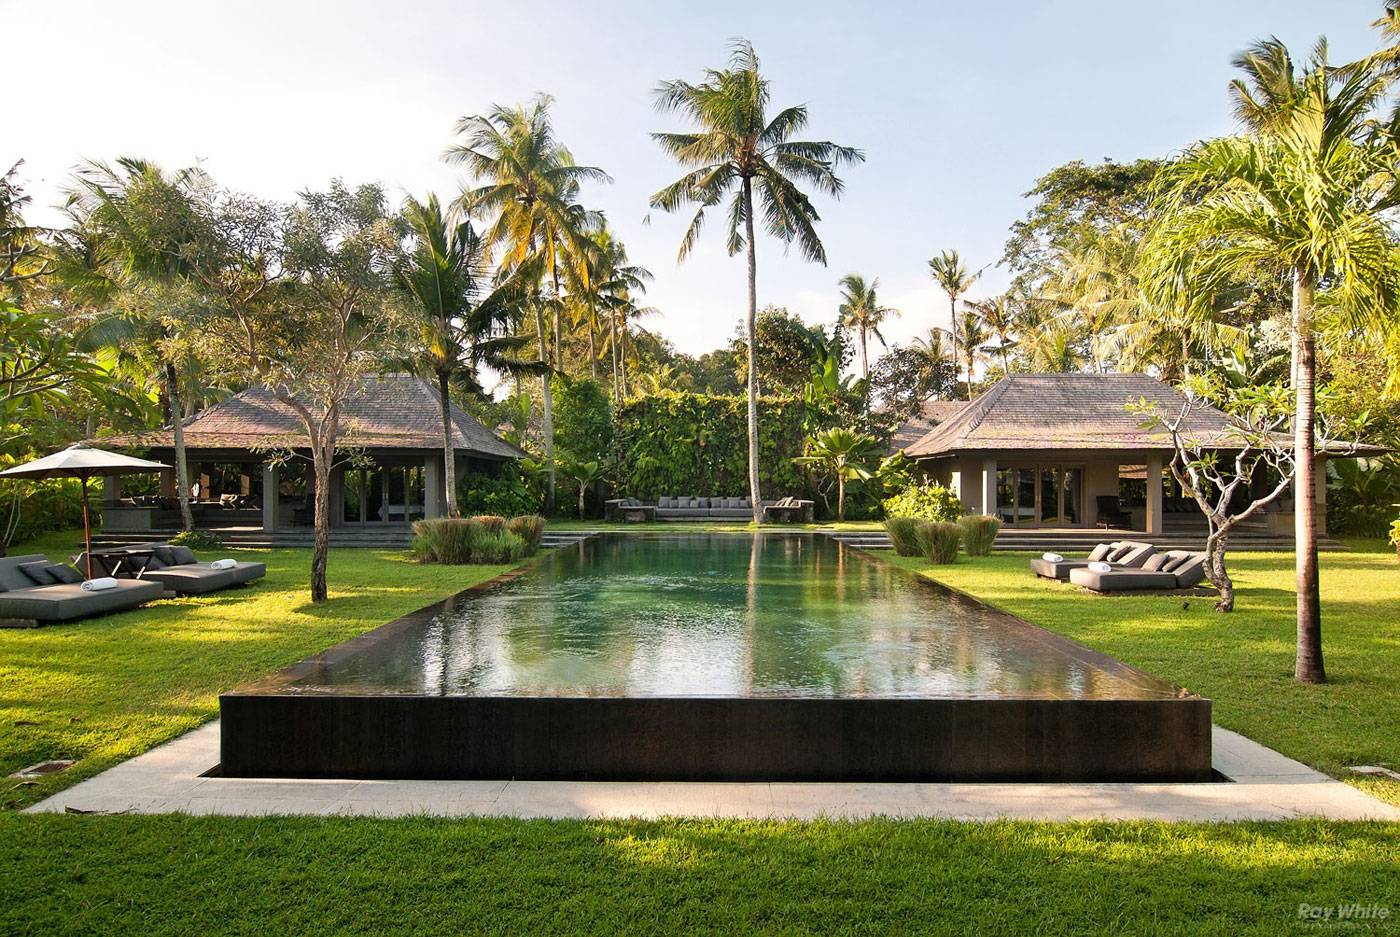 Bali villas for sale